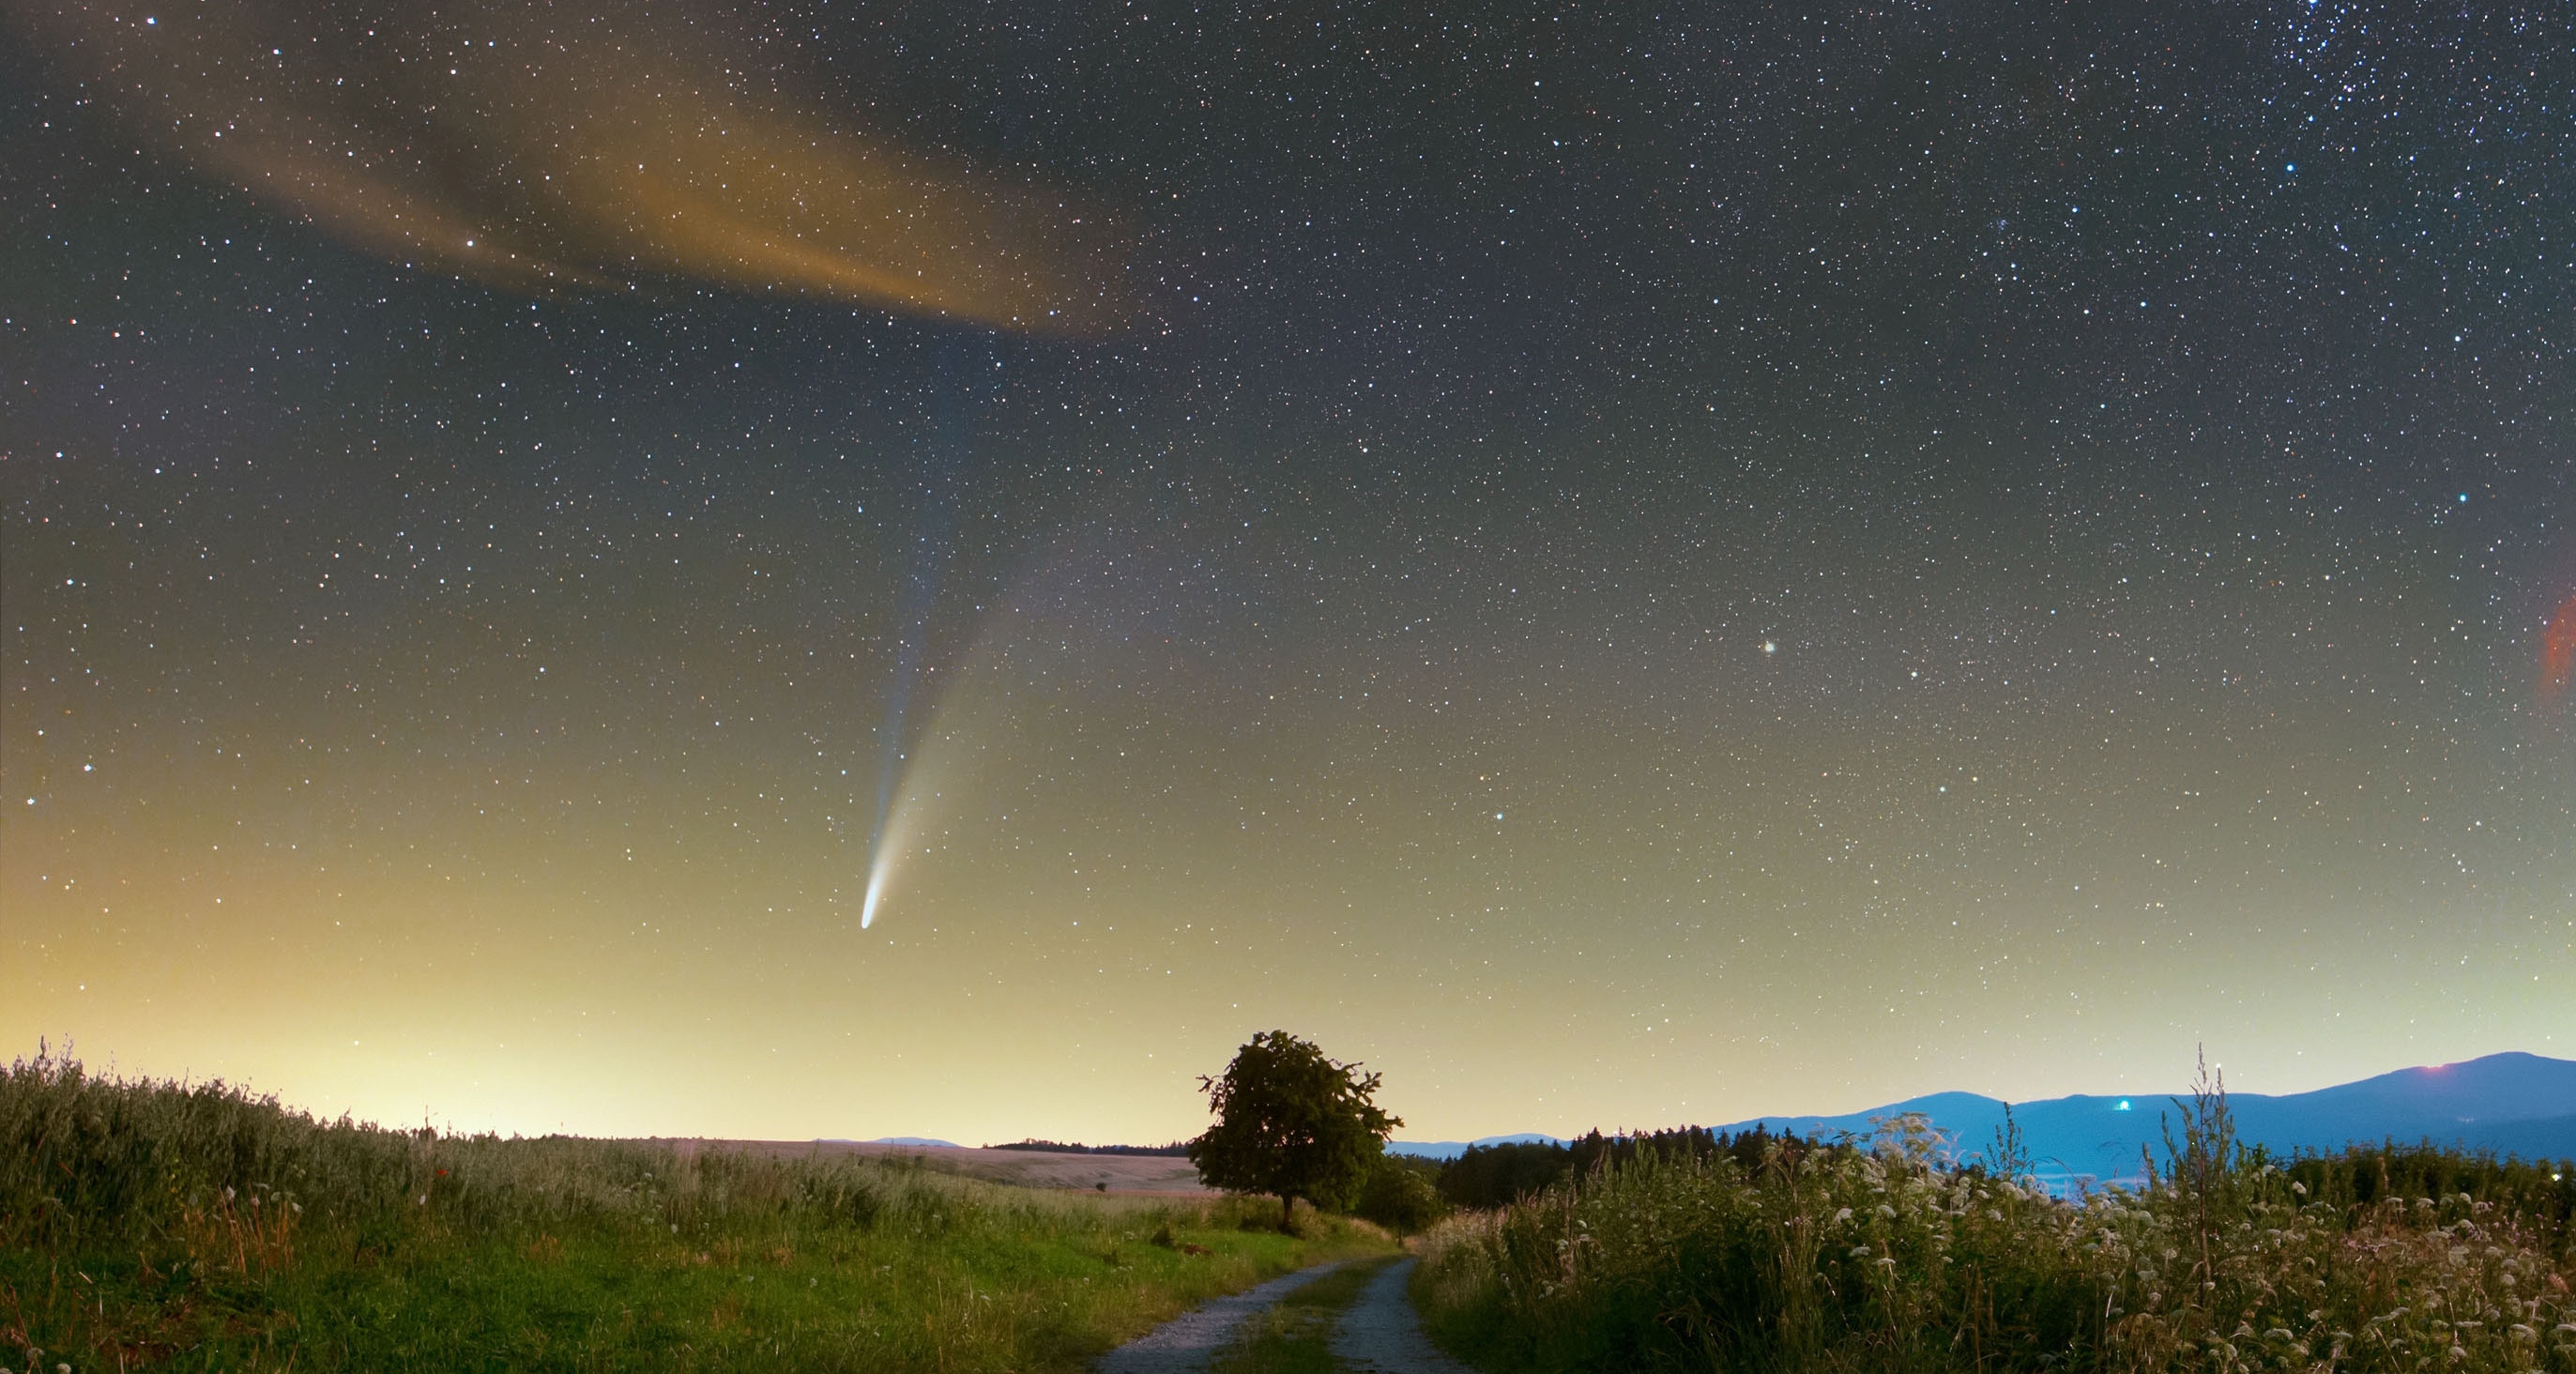 La comète C/2020 F3 (Neowise) photographiée en Pologne. © Jarek Oszywa, Apod, Nasa